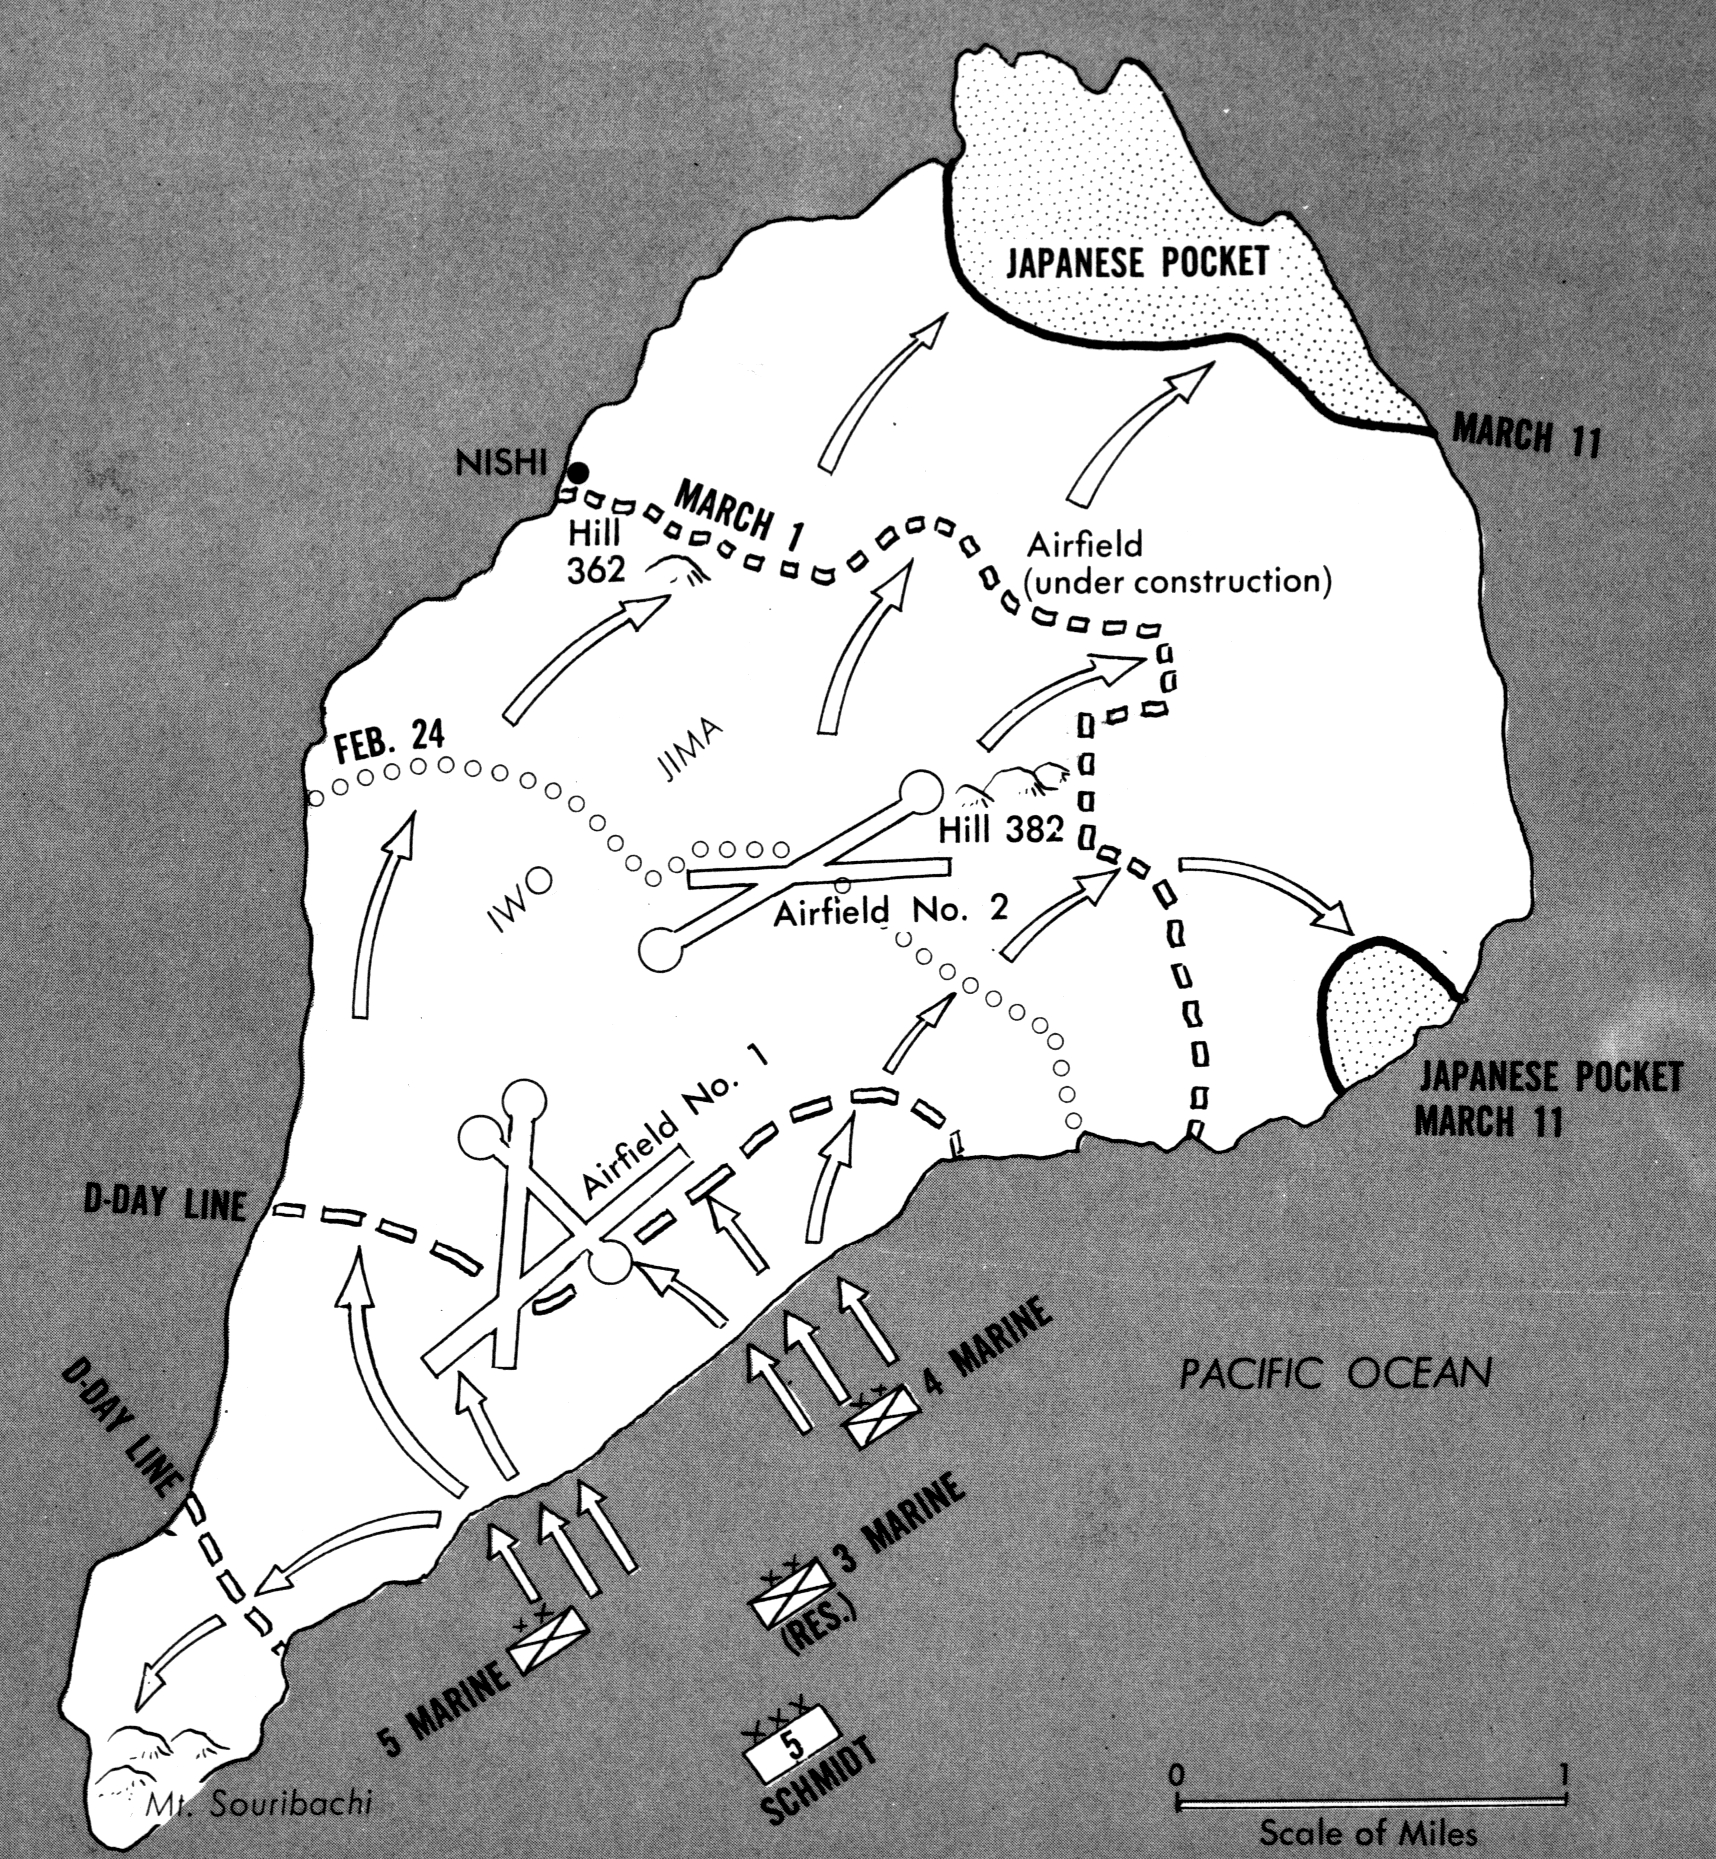 American Invasion Of Iwo Jima Feb 19 Mar 11 1945